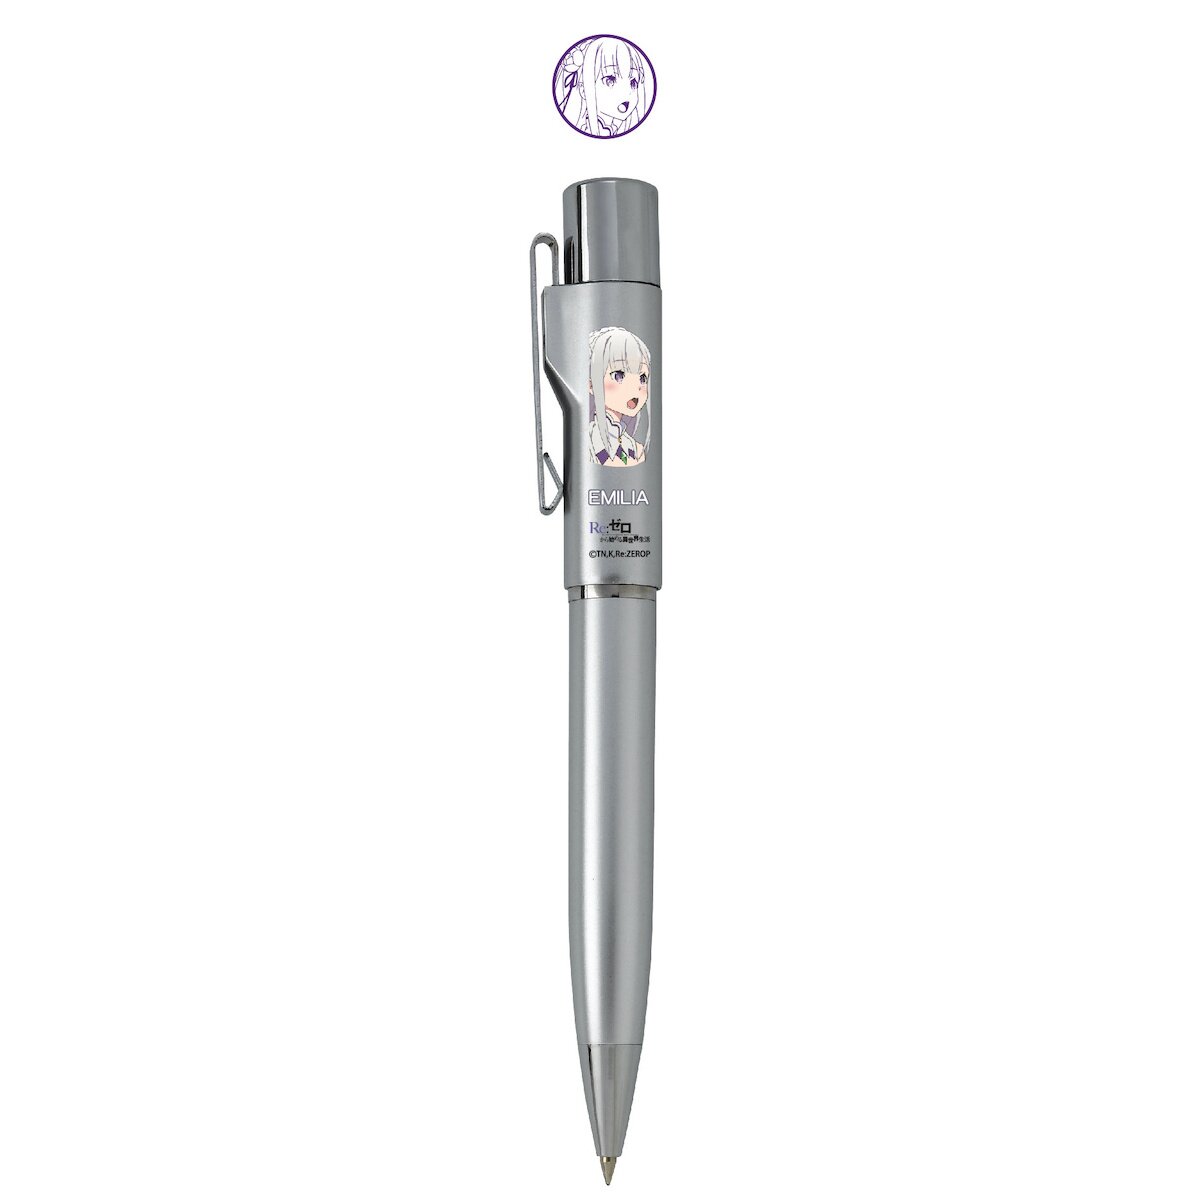 Re: Zero Stamp Ballpoint Pen w/ Stamp Vol. 2 76% OFF - Tokyo Otaku Mode  (TOM)